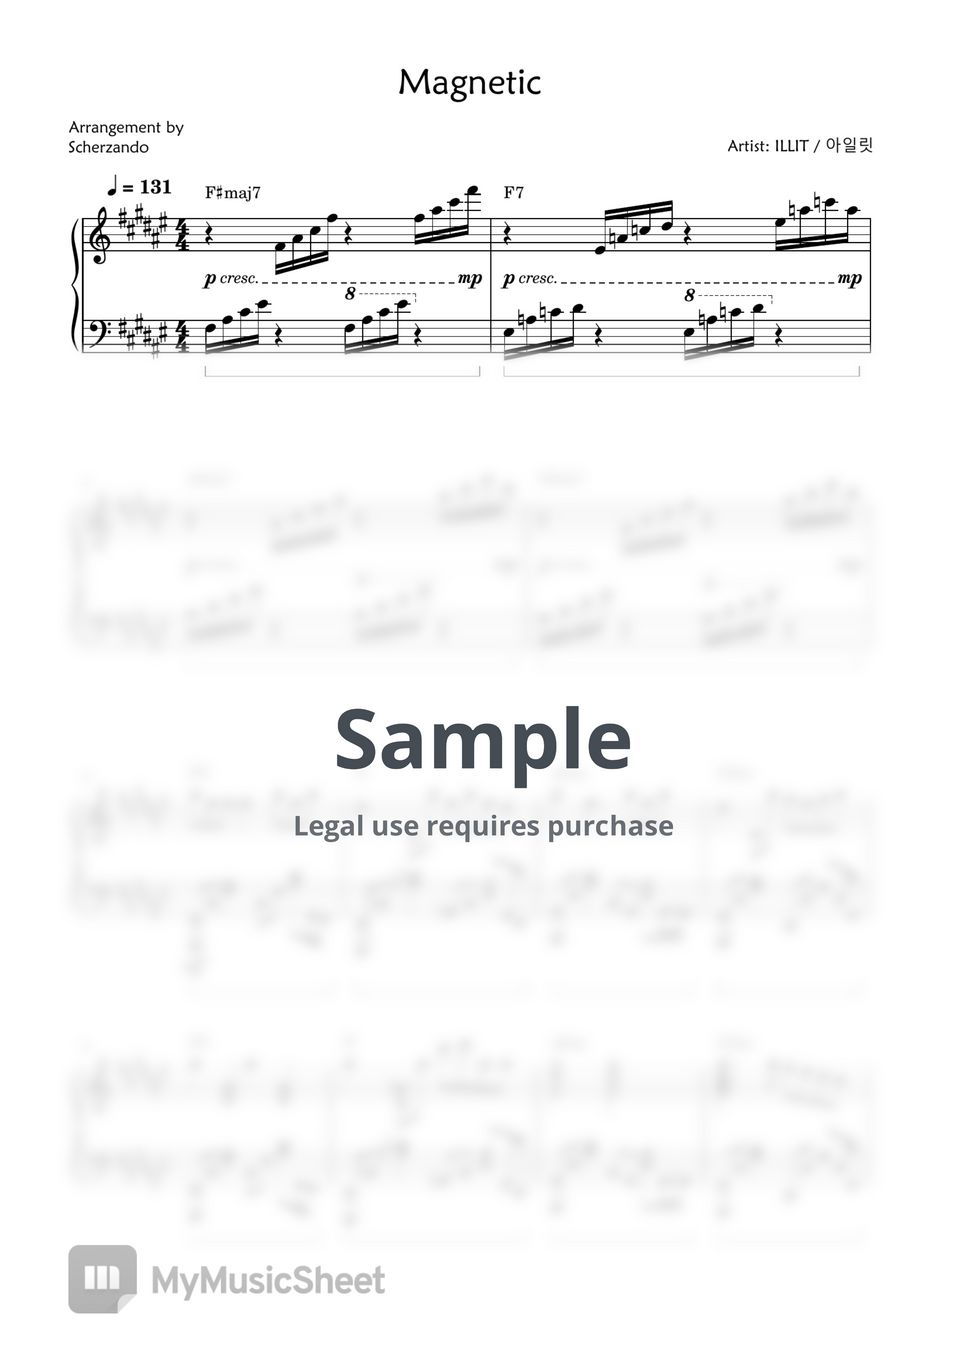 ILLIT - Magnetic (Piano Arrangement) by Scherzando